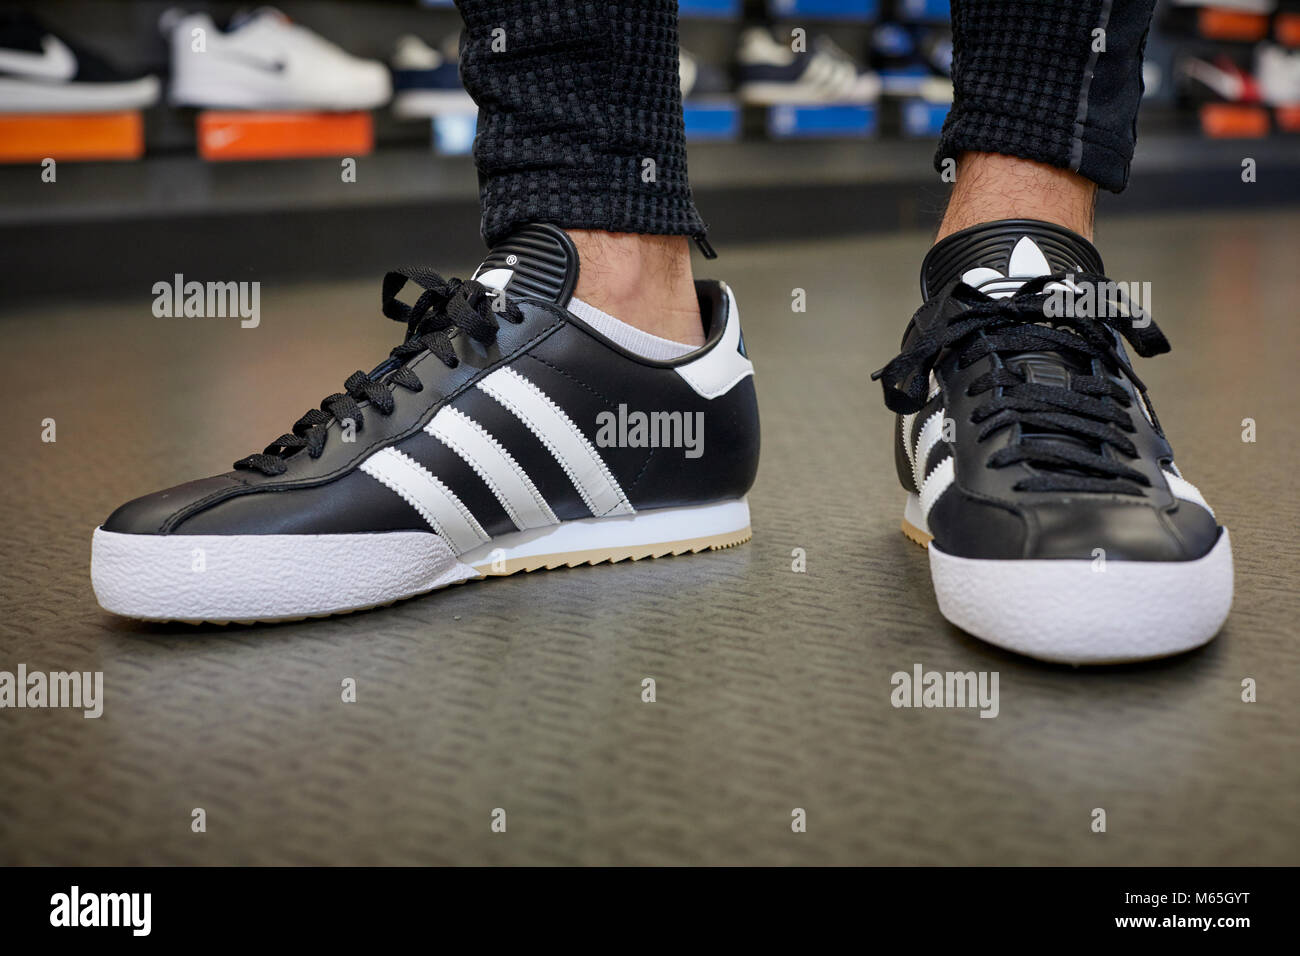 Adidas classic retro Samba trainers Stock Photo - Alamy